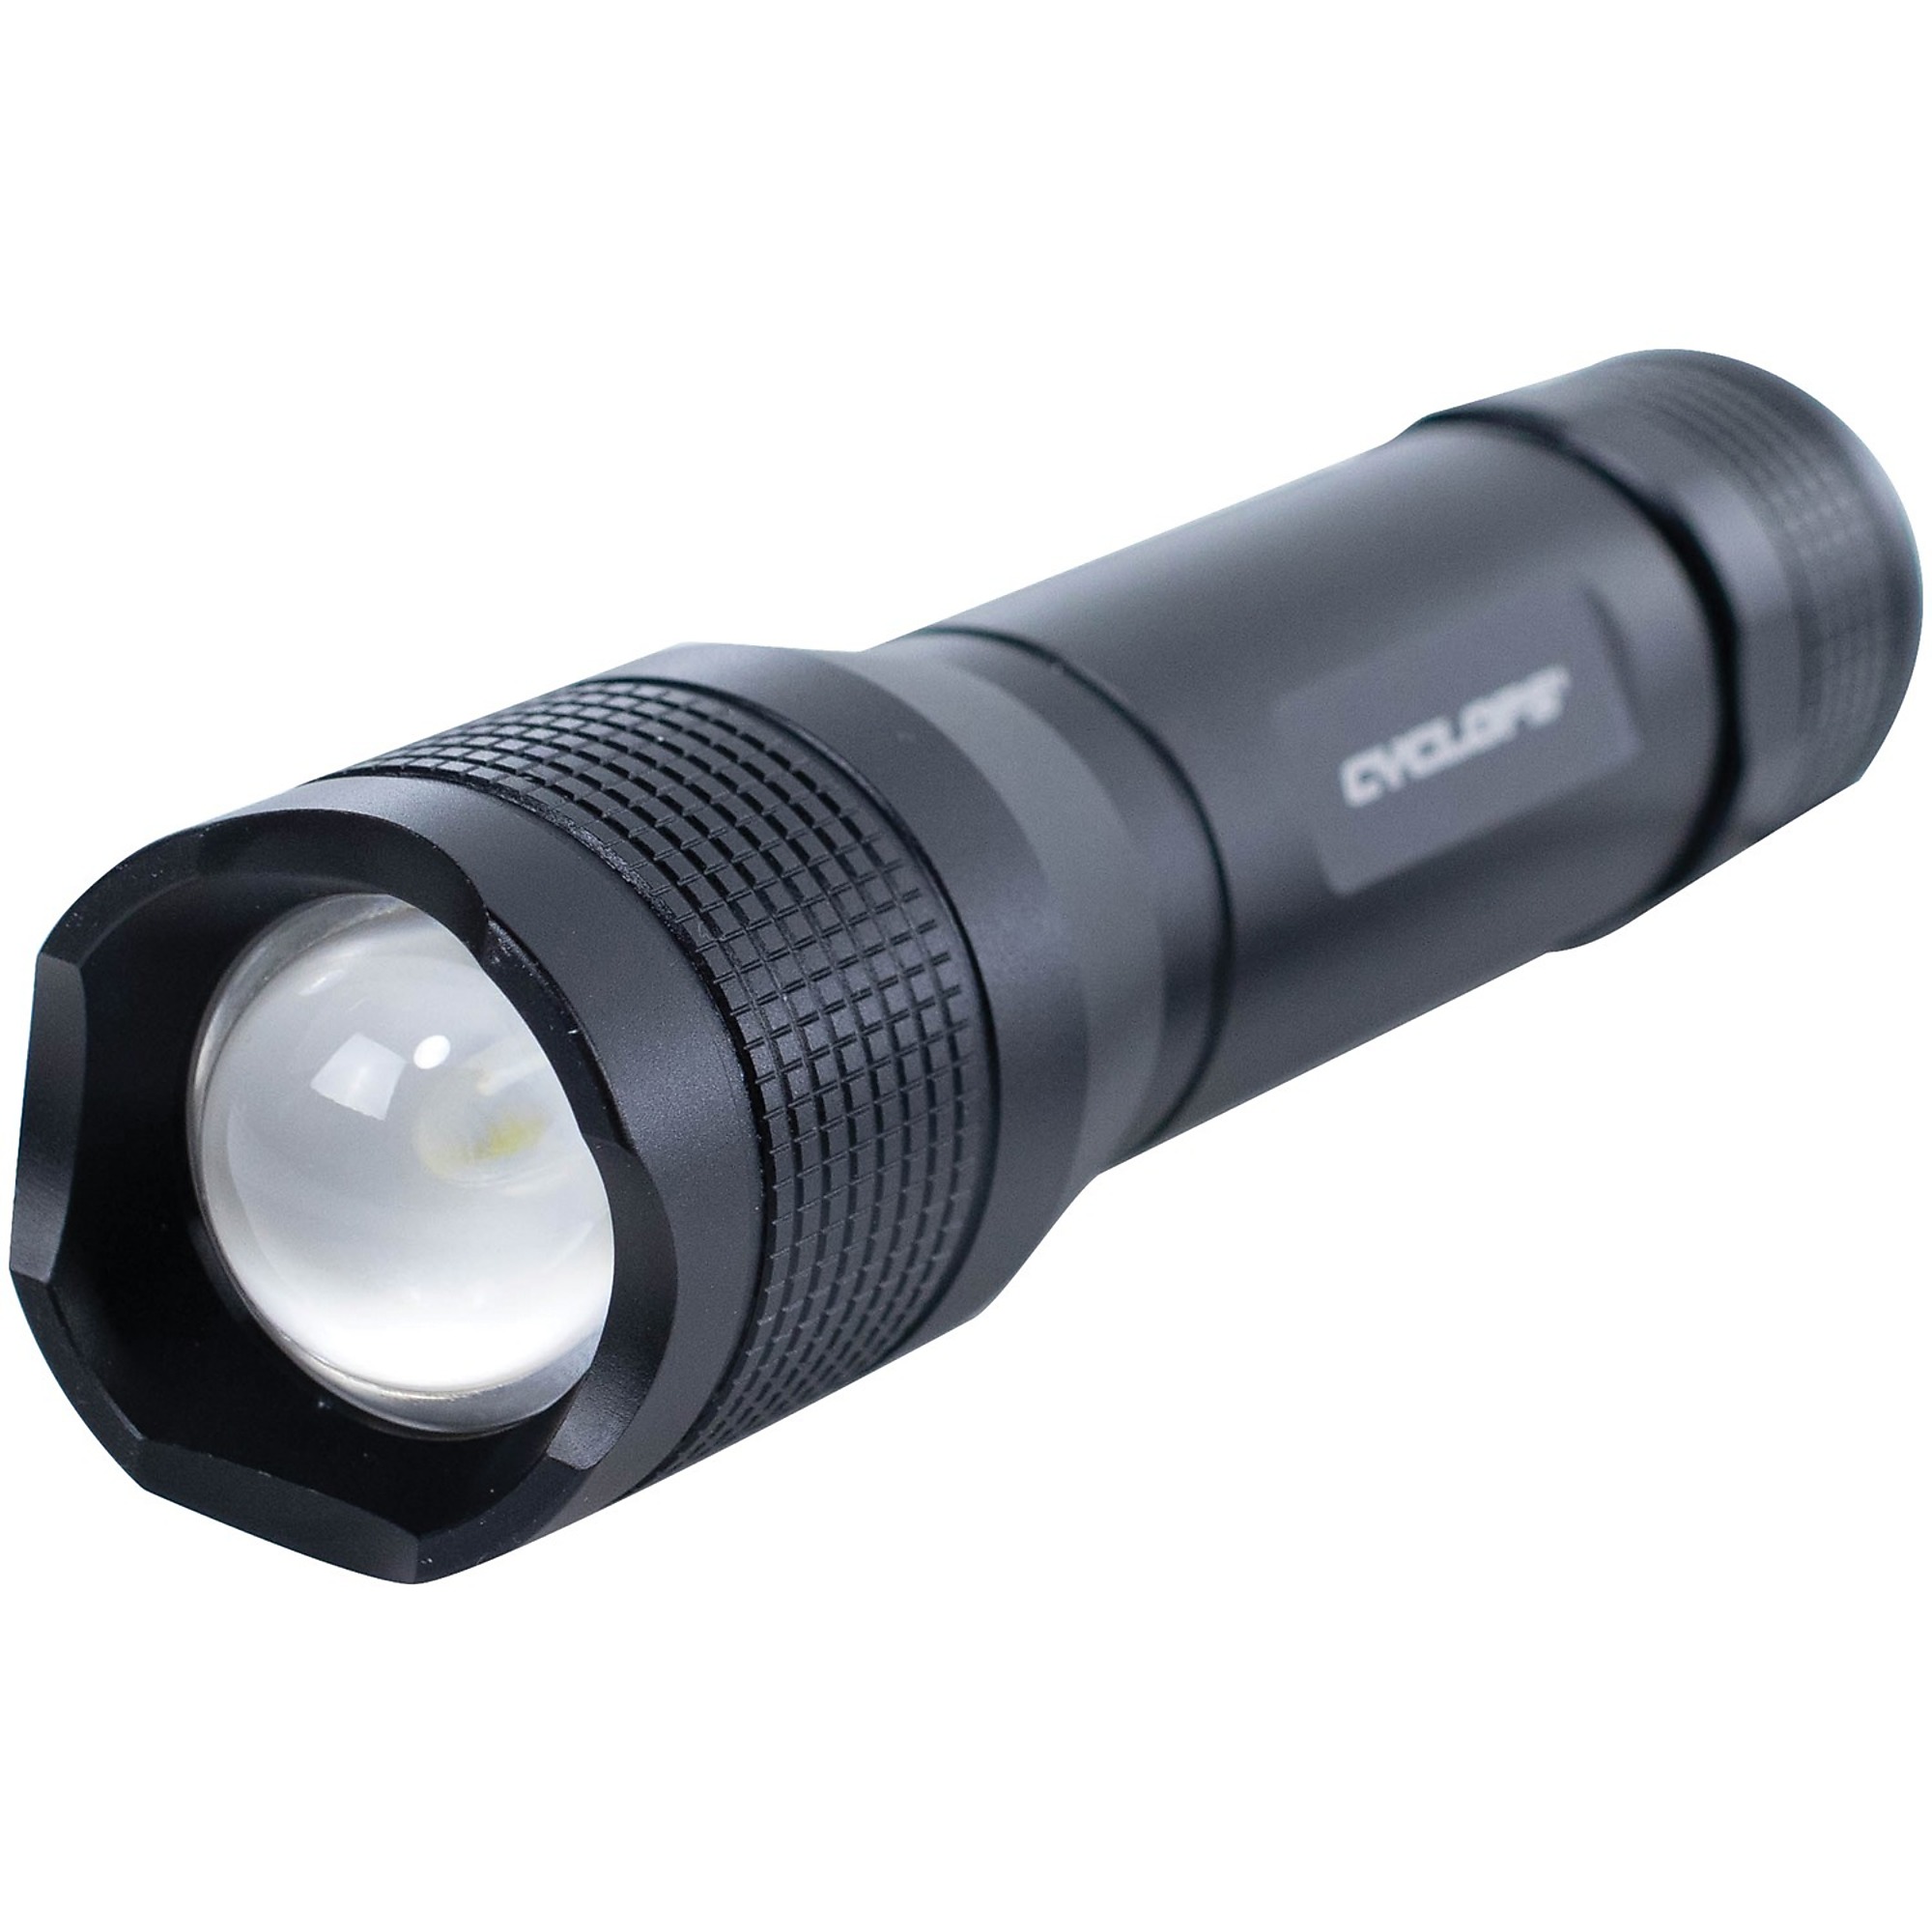 Cyclops, Tactical Flashlight, Light Output 1500 lumen, Light Bulb Type LED, Watts 17 Model CYC-TF1500